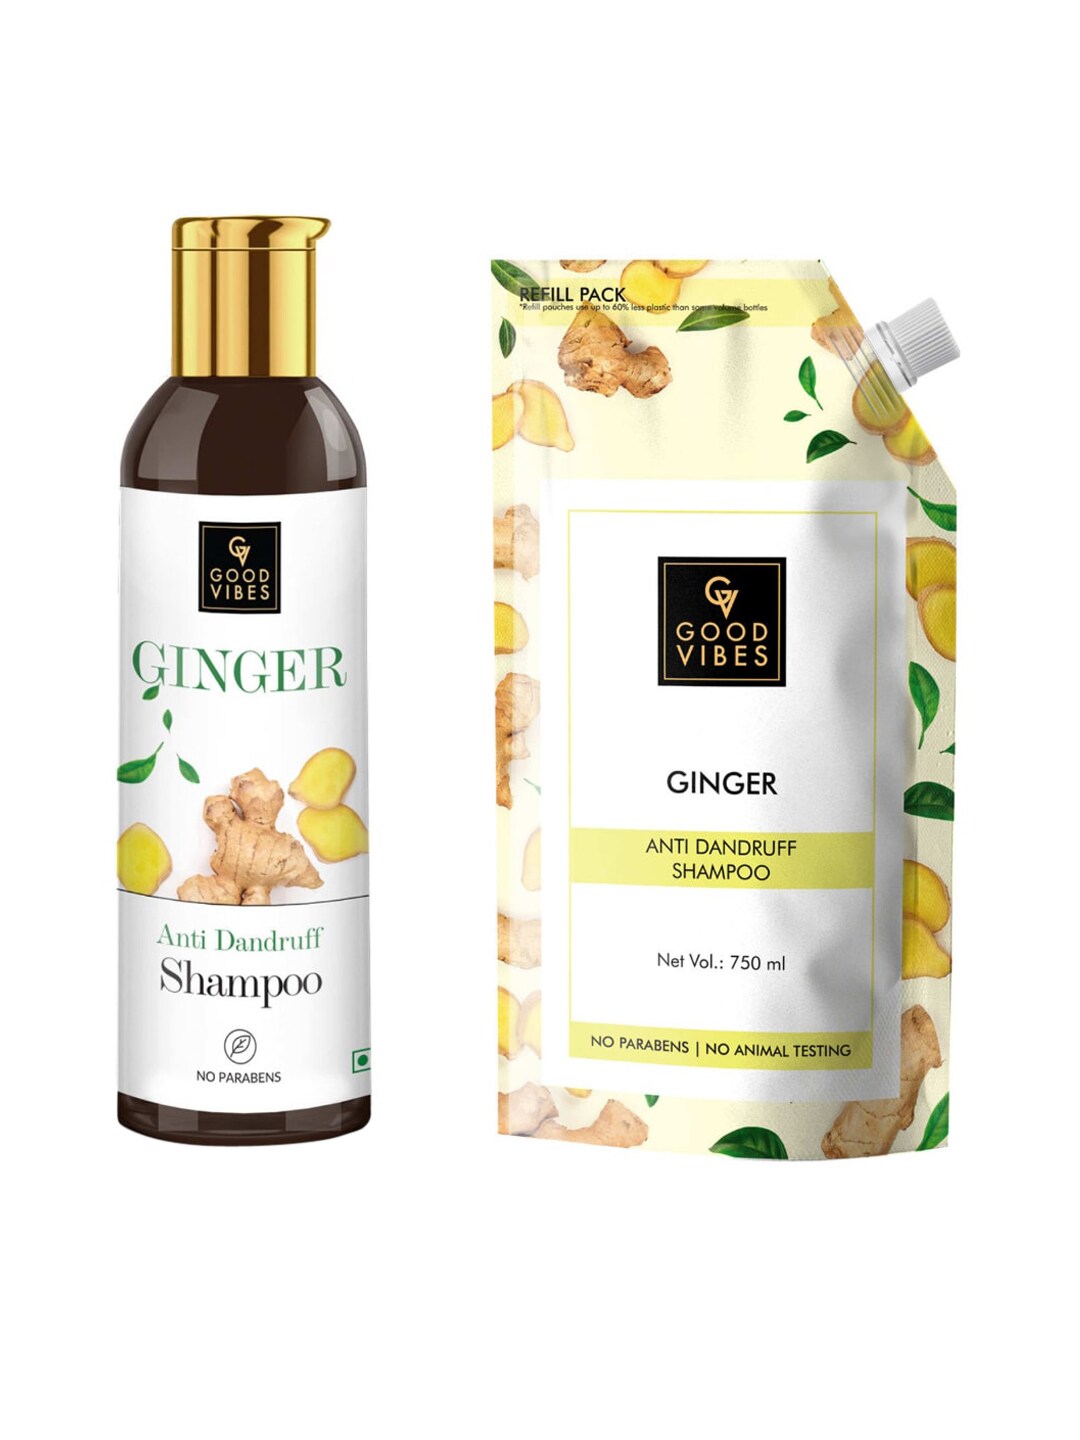 Good Vibes Ginger Anti Dandruff Shampoo Super Saver Combo 950 ml Price in India